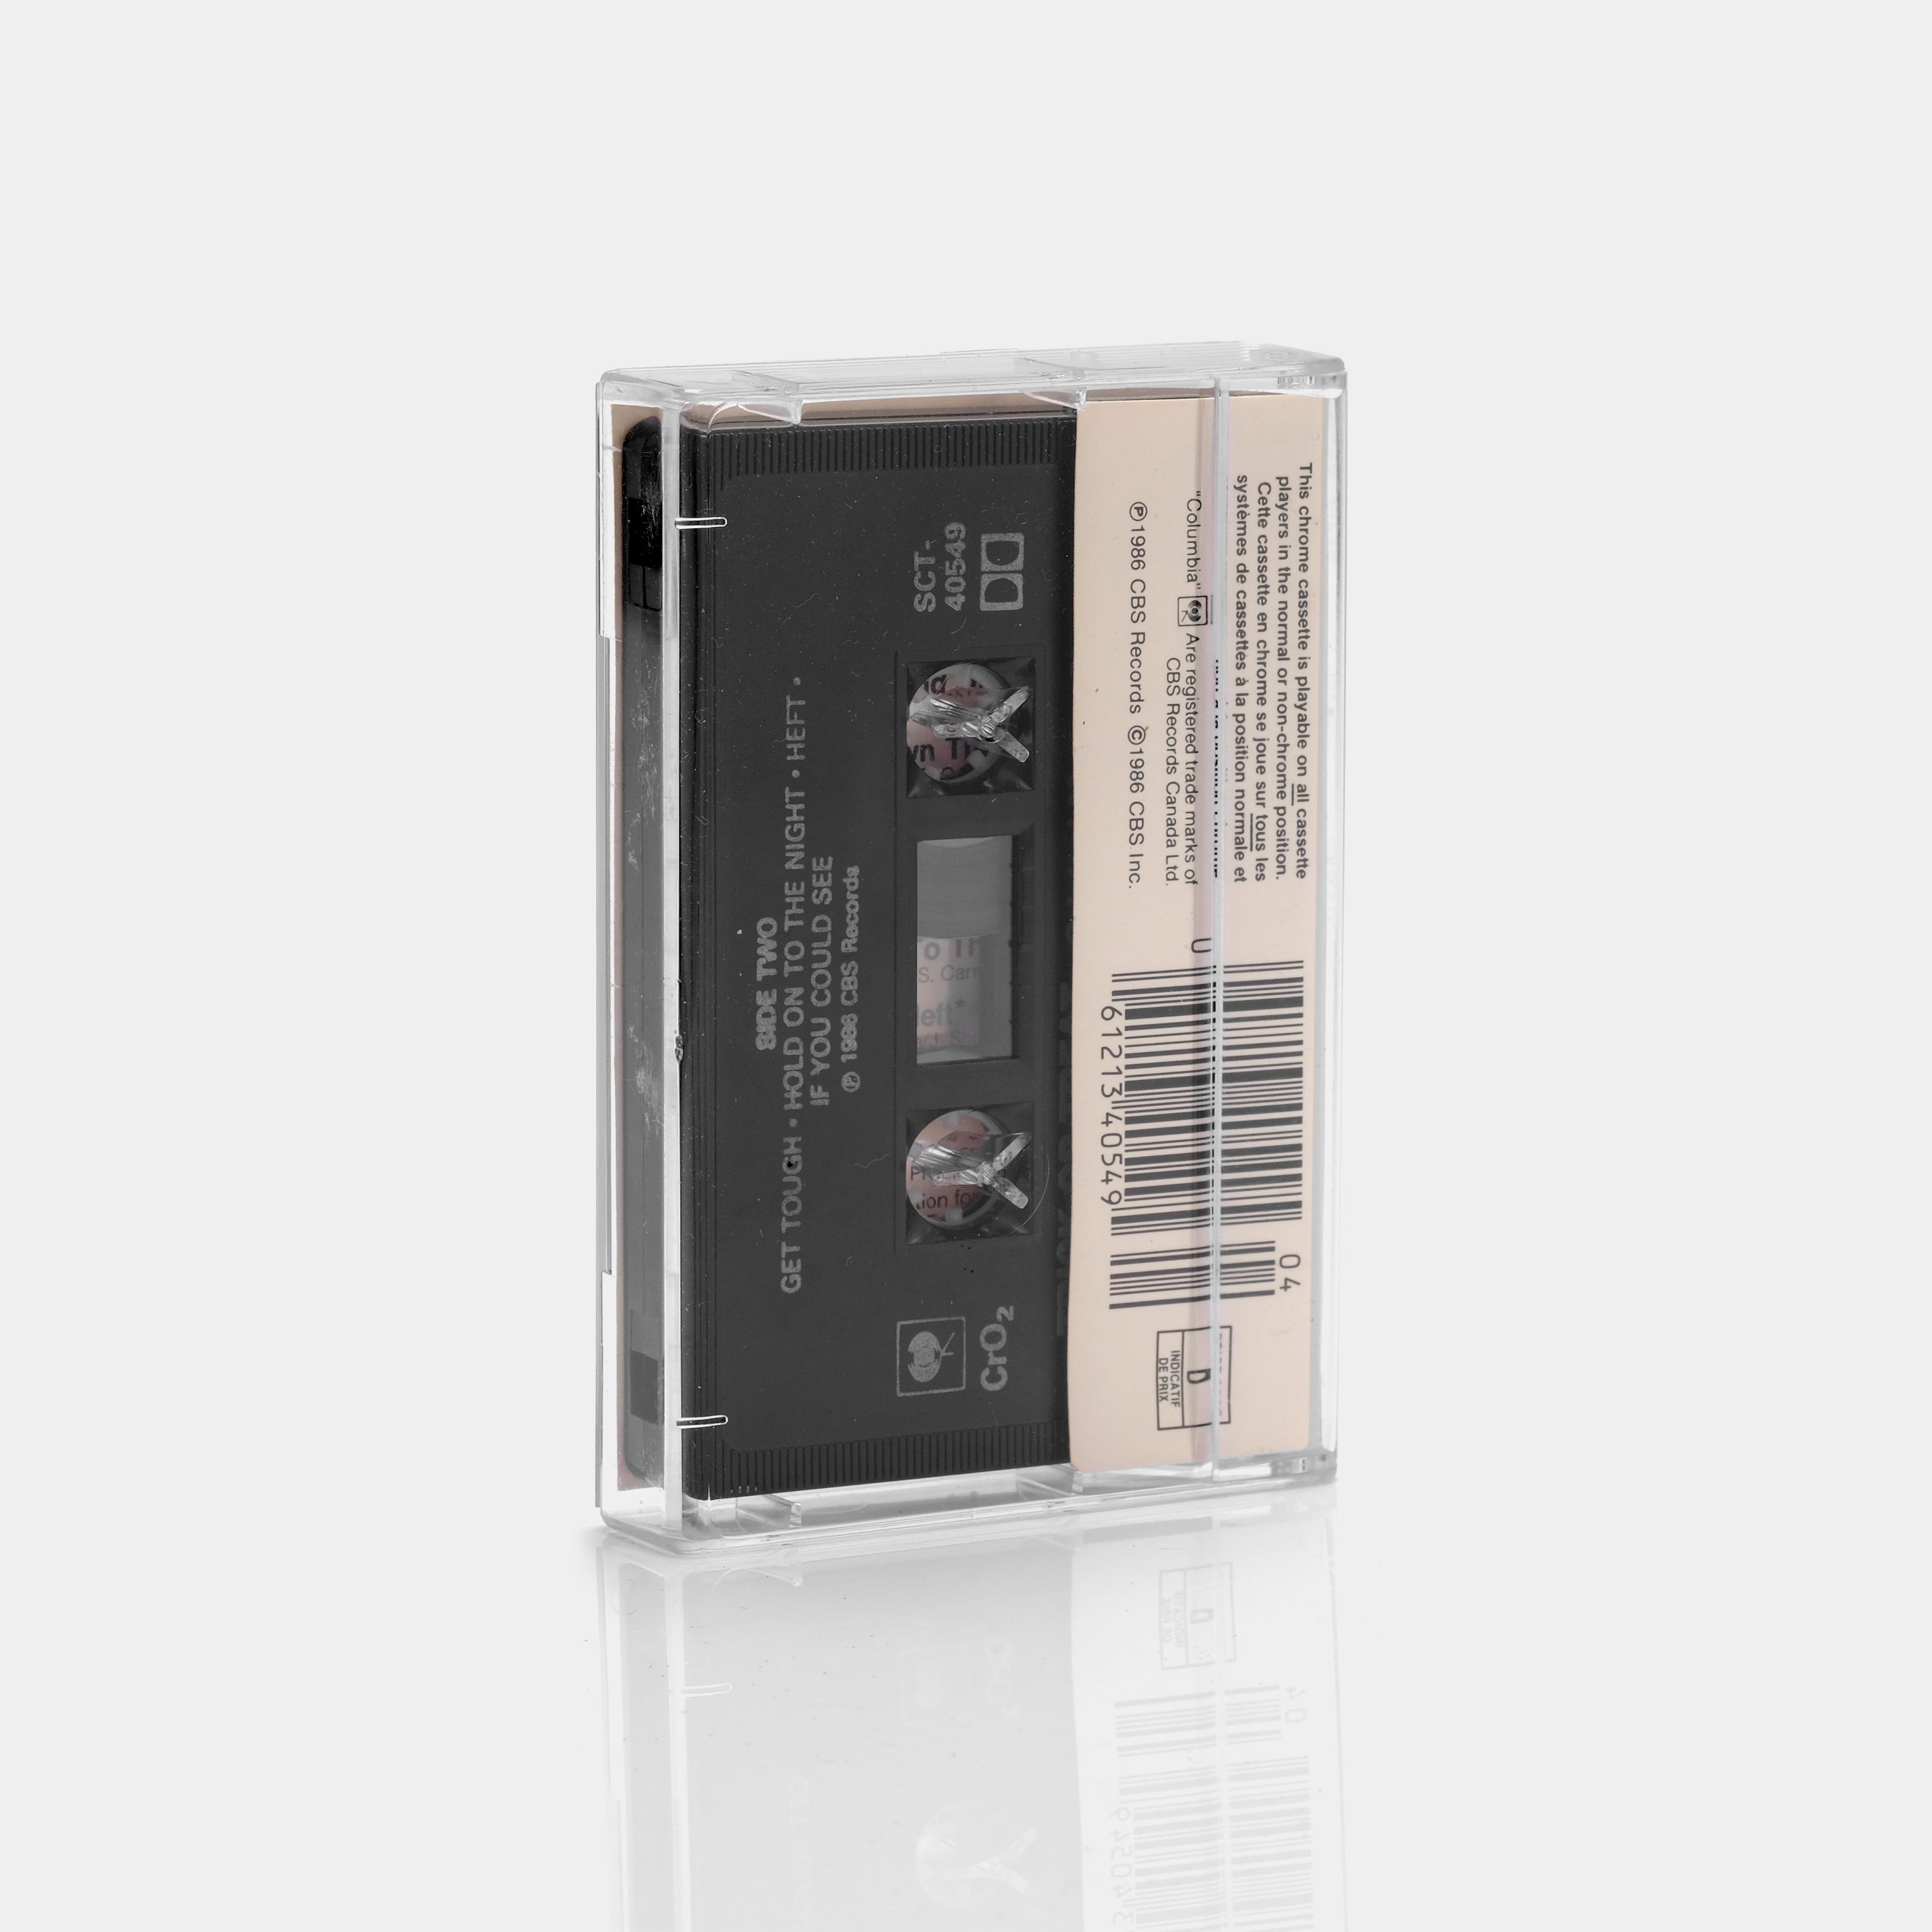 Fastway - Trick Or Treat (Original Motion Picture Soundtrack) Cassette Tape